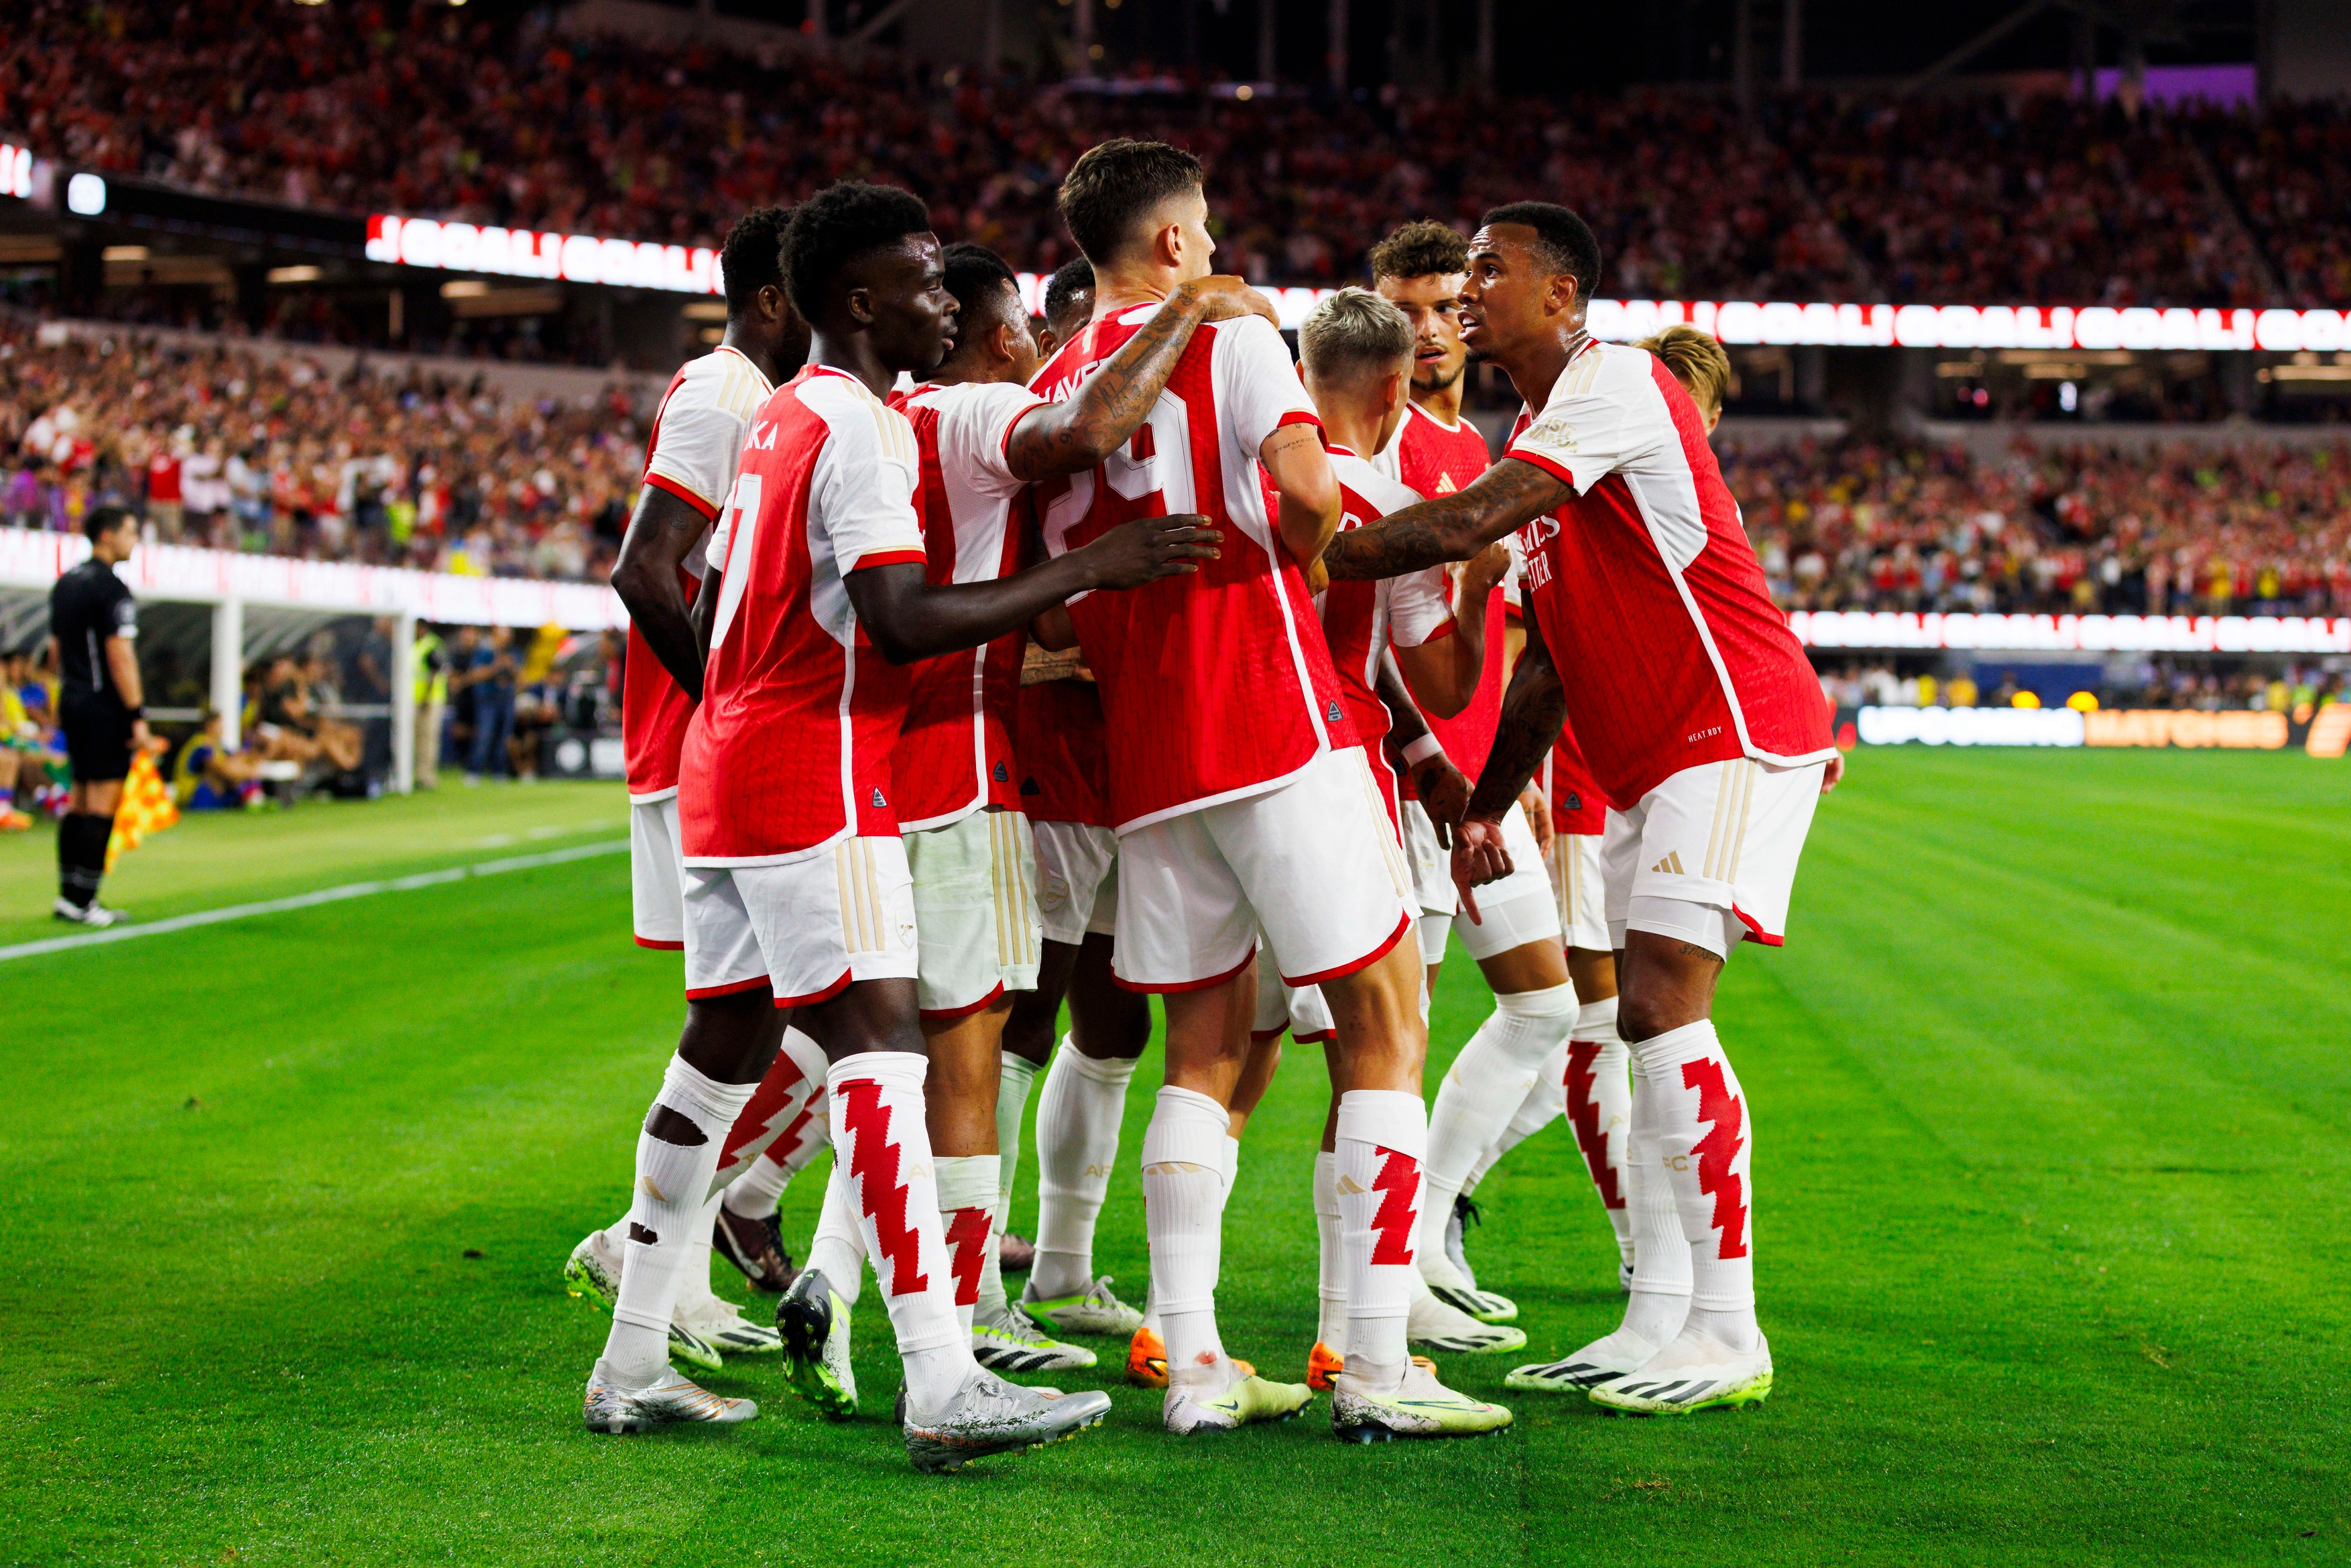 Arsenal - Manchester United 1-1, ACUM, pe DGS 1. ”Tunarii” restabilesc egalitatea rapid